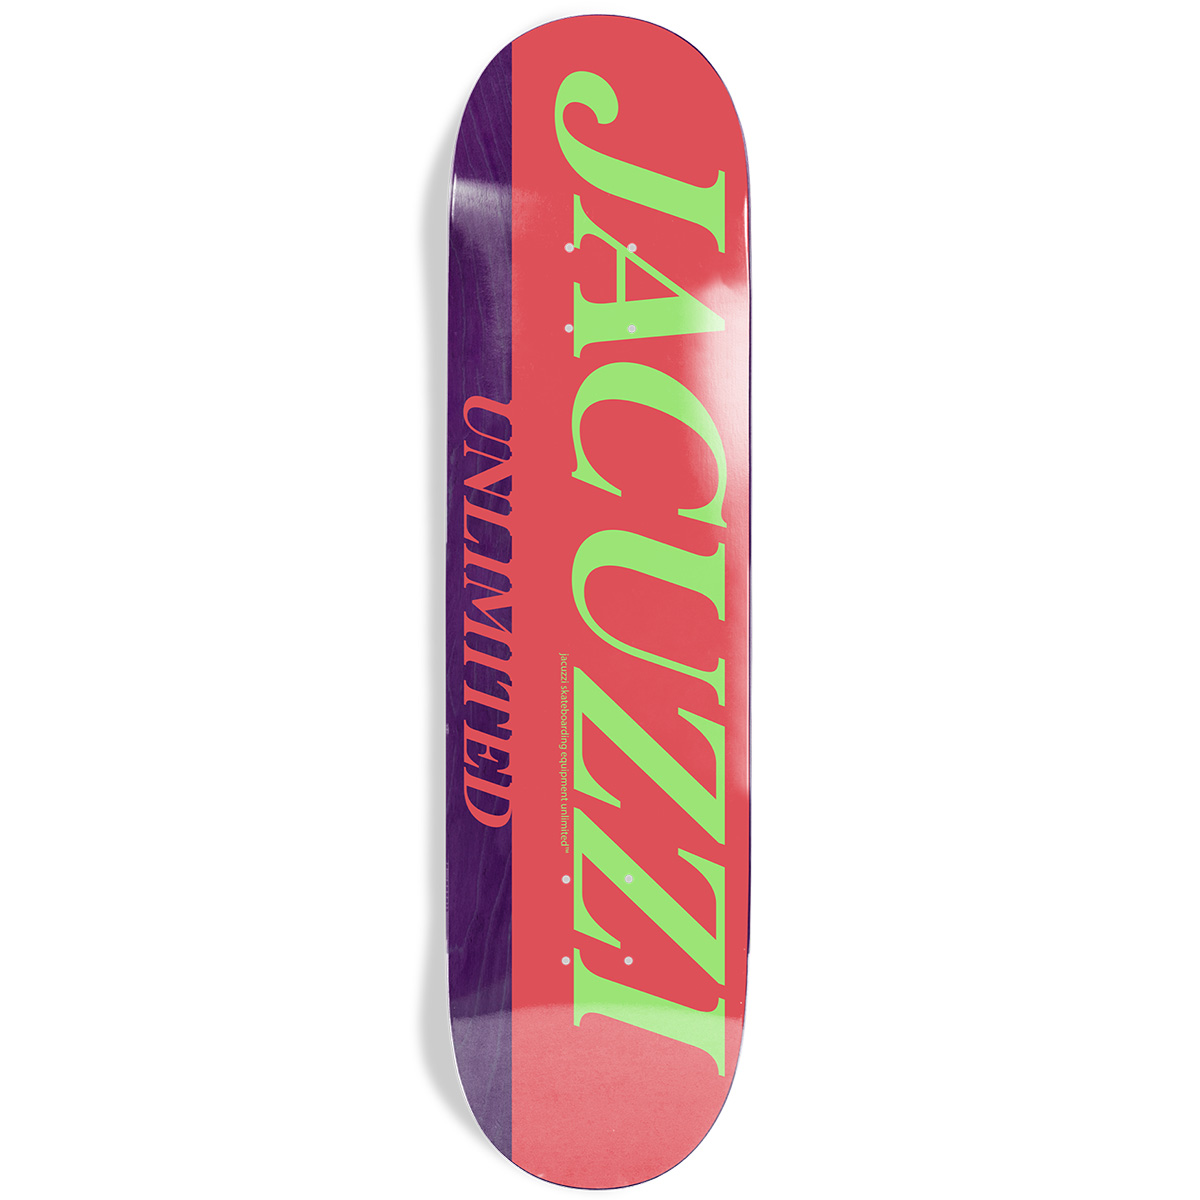 Jacuzzi Flavor Skateboard Deck 8.25